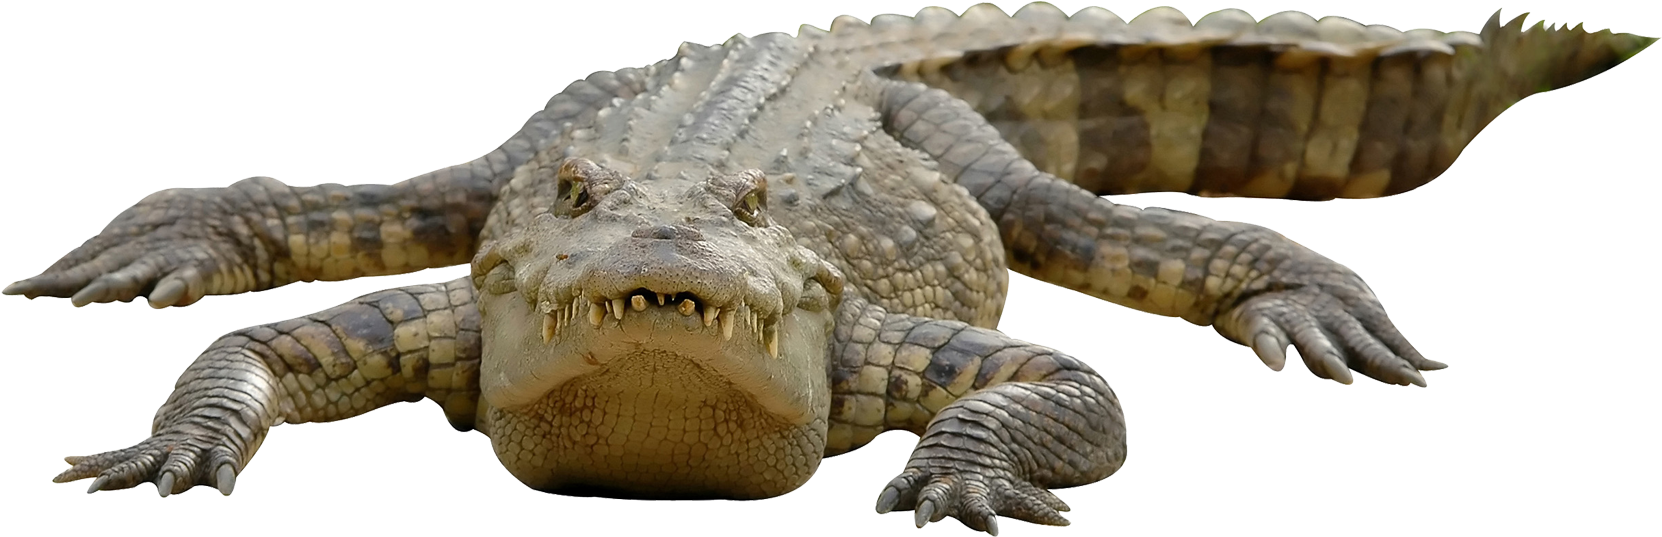 A Crocodile With Sharp Teeth